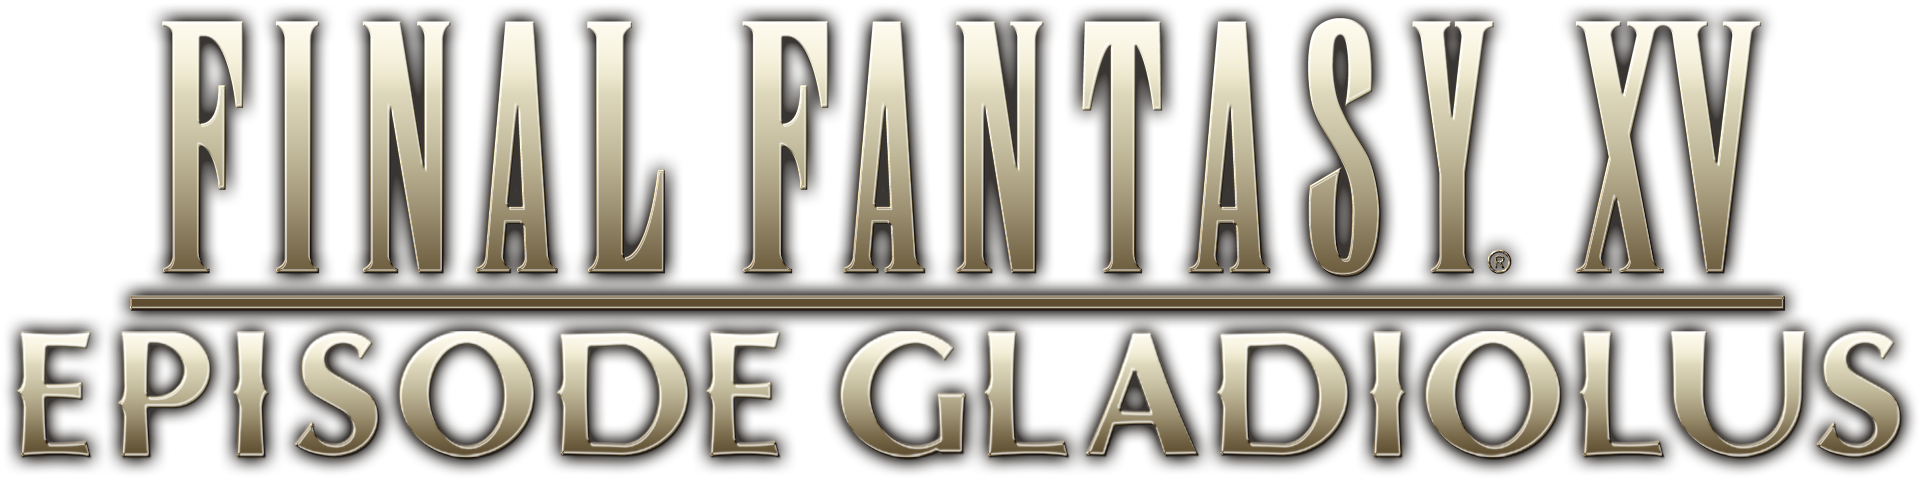 Final Fantasy Logo PNG Transparent Picture